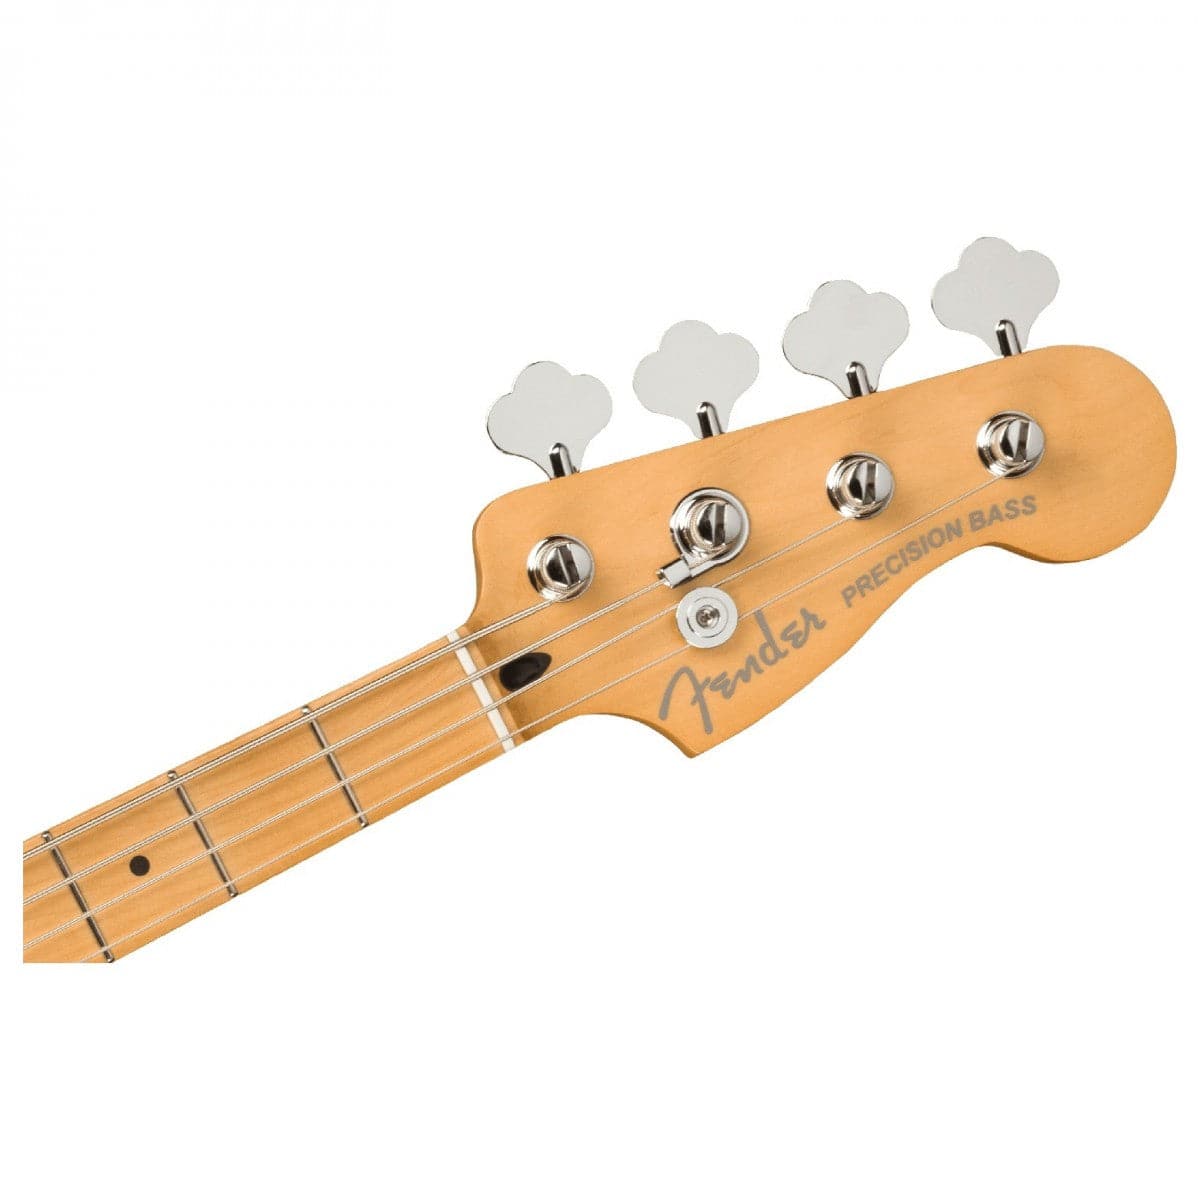 Fender Player Plus Active Precision Bass Guitar - Silver Smoke